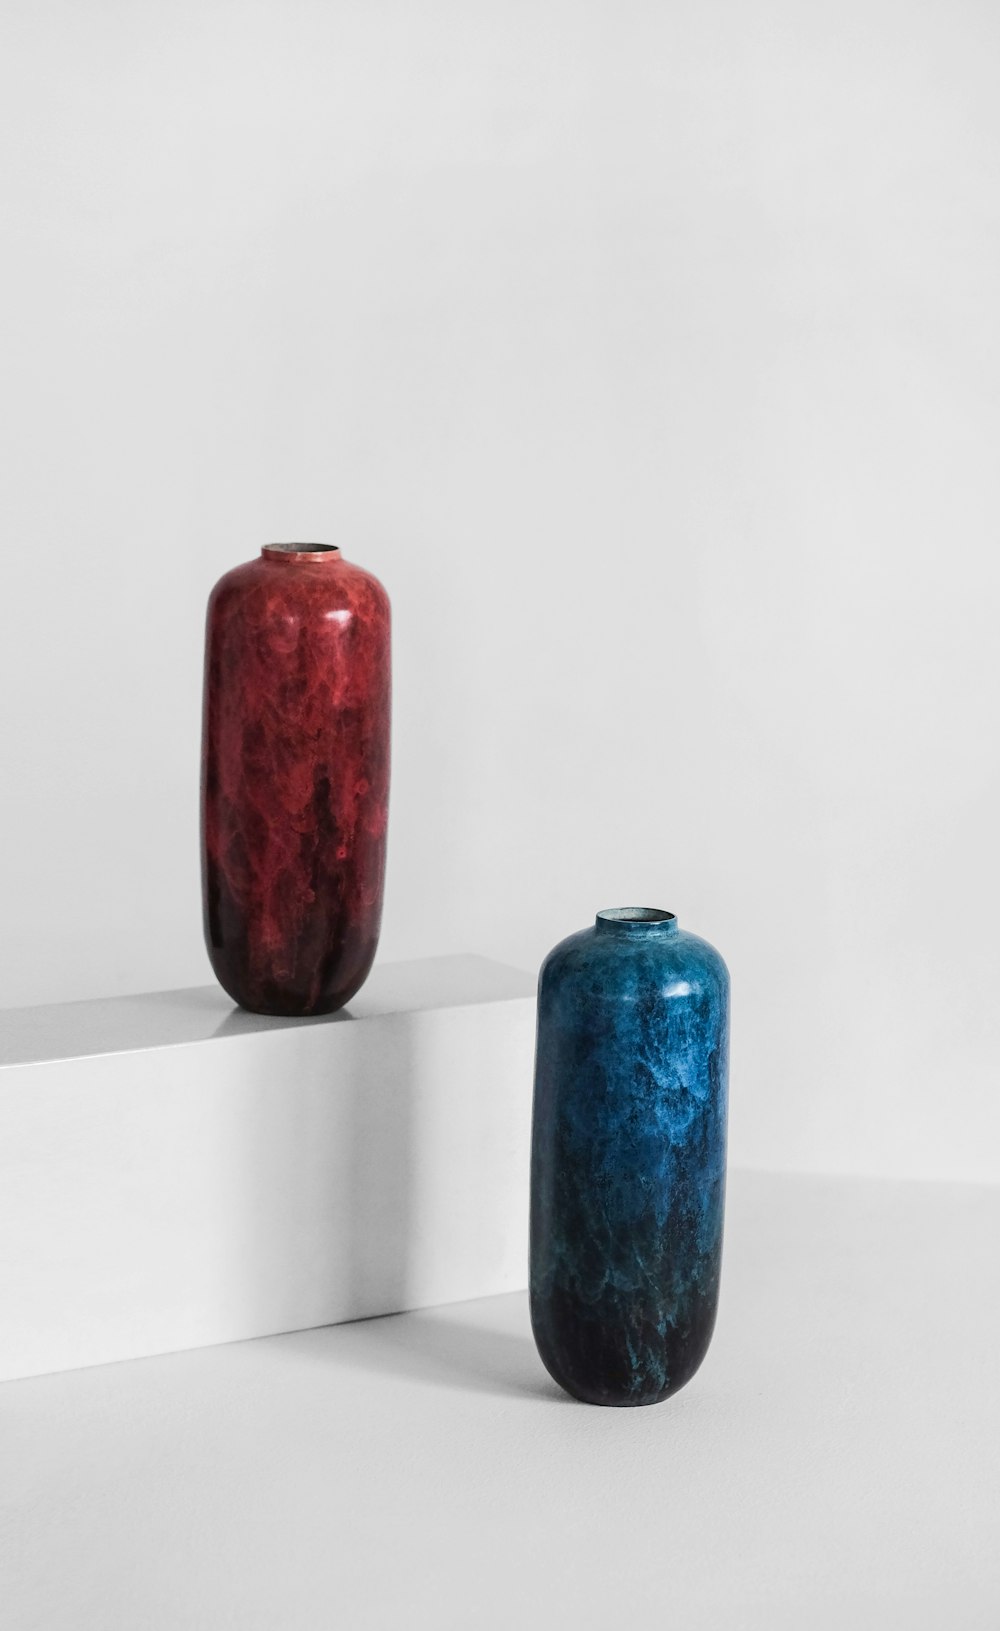 red and blue ceramic jars